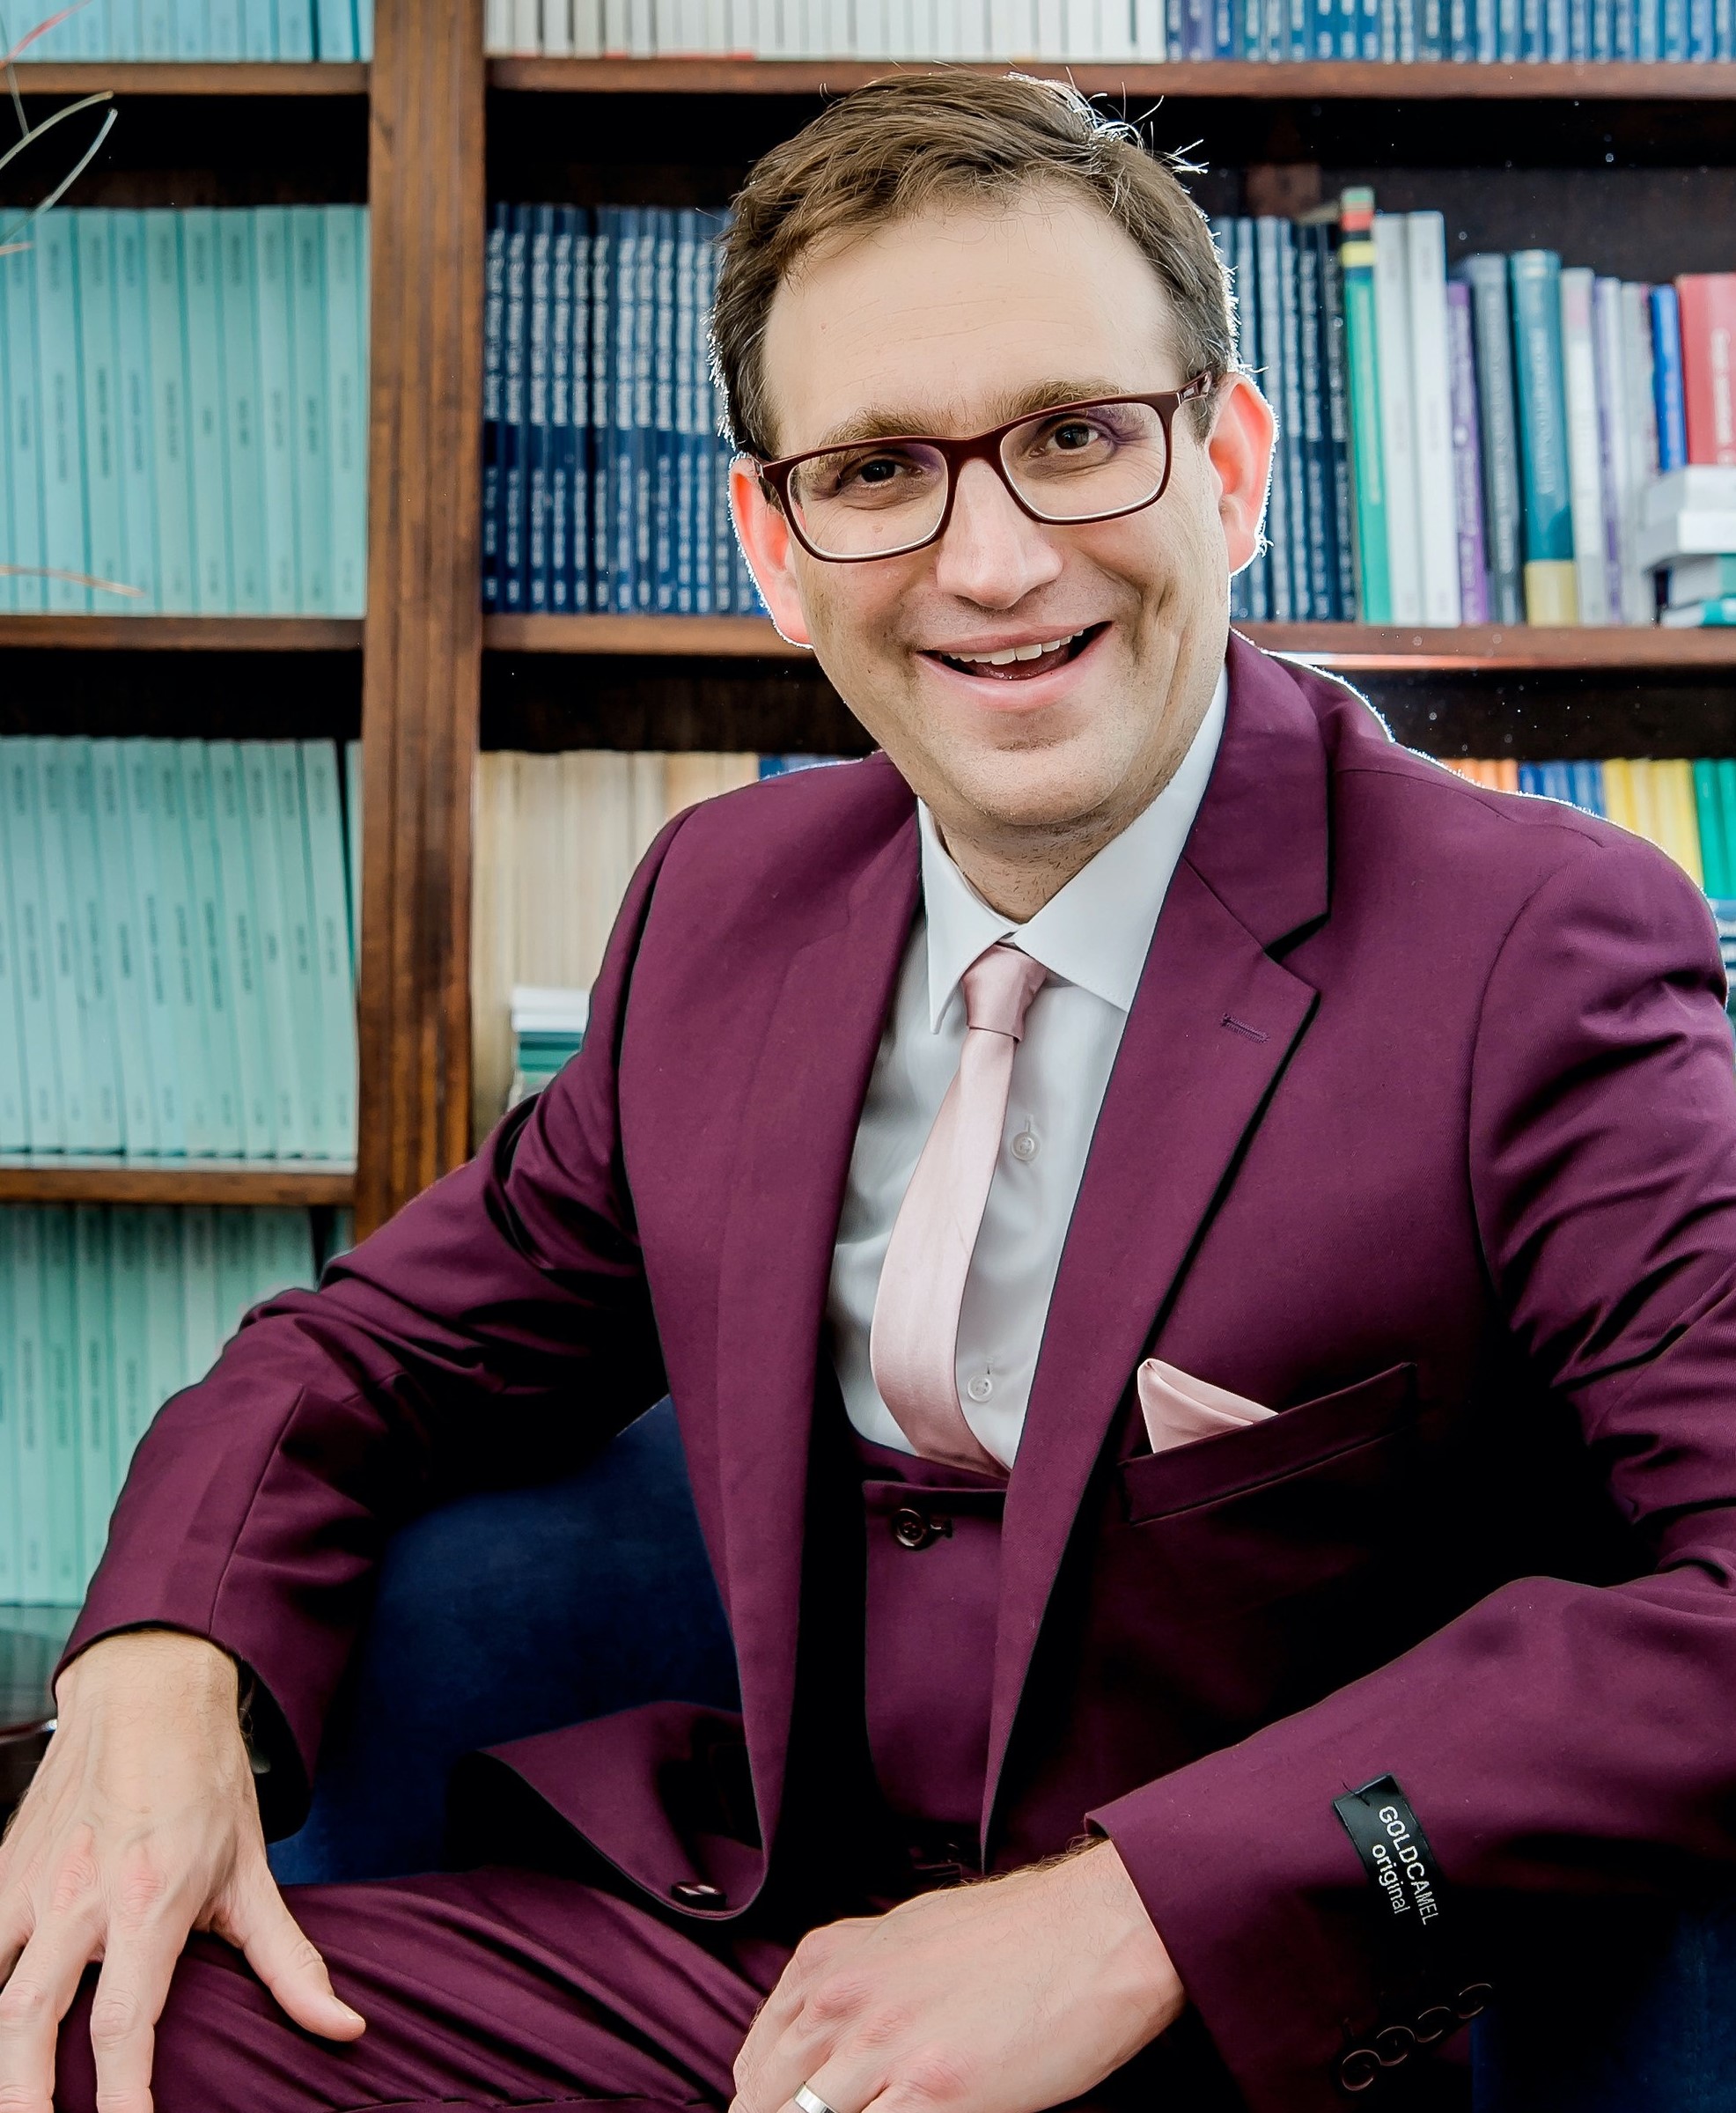 Professor Bilchitz wearing a plum suit and pink tie, sitting in front of a bookshelf.